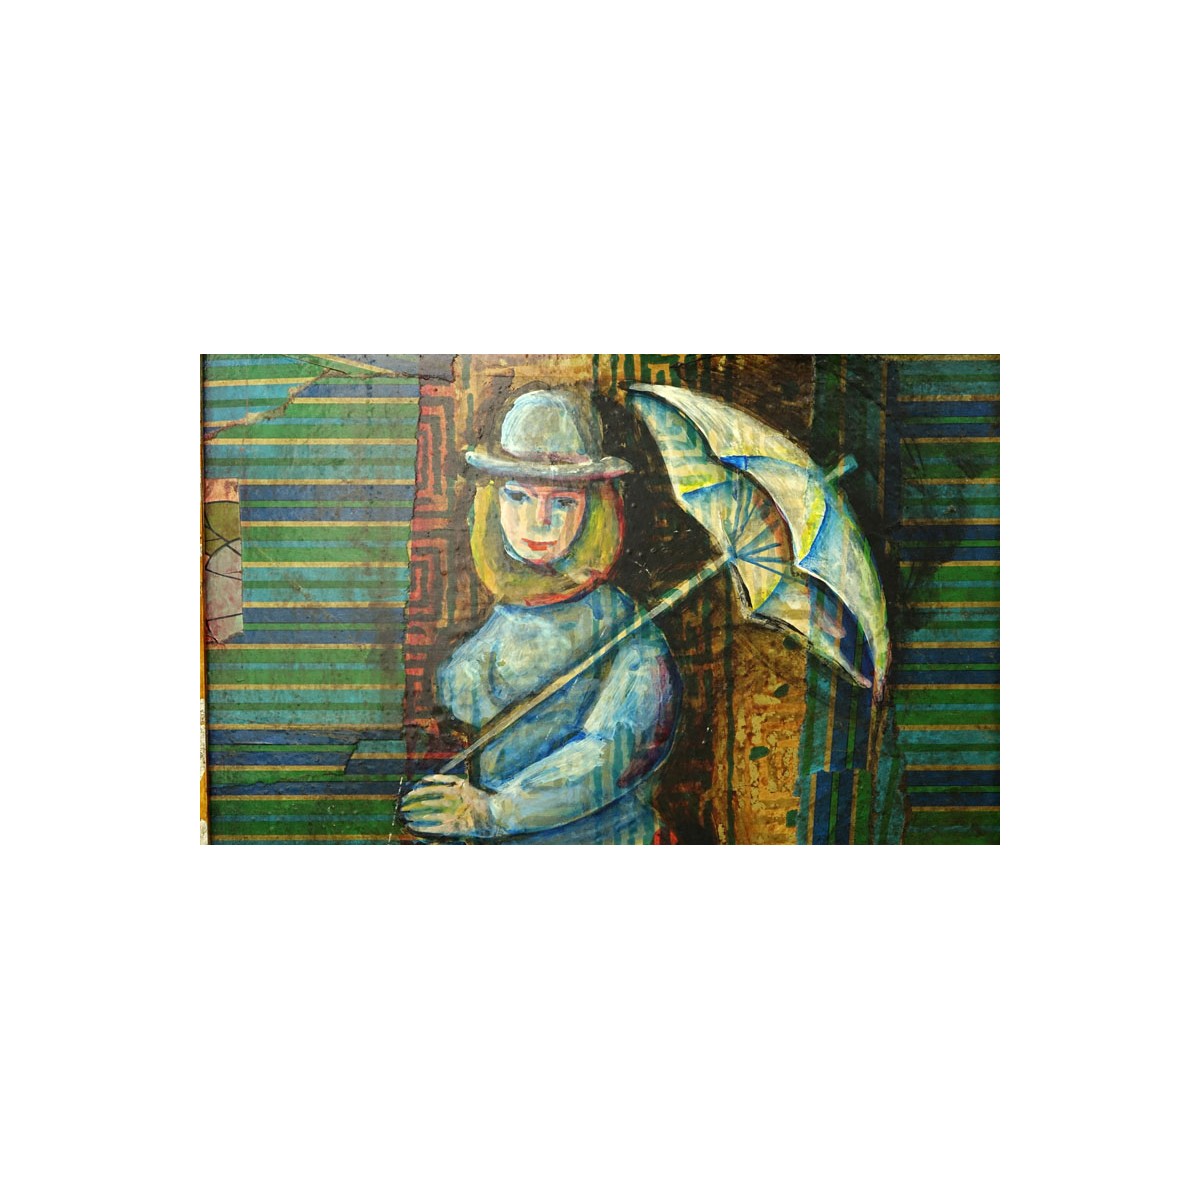 Luis Alberto Solari, Uruguayan (1918-1993) "Lady with Umbrella" Mixed Media Collage Signed Lower Ri